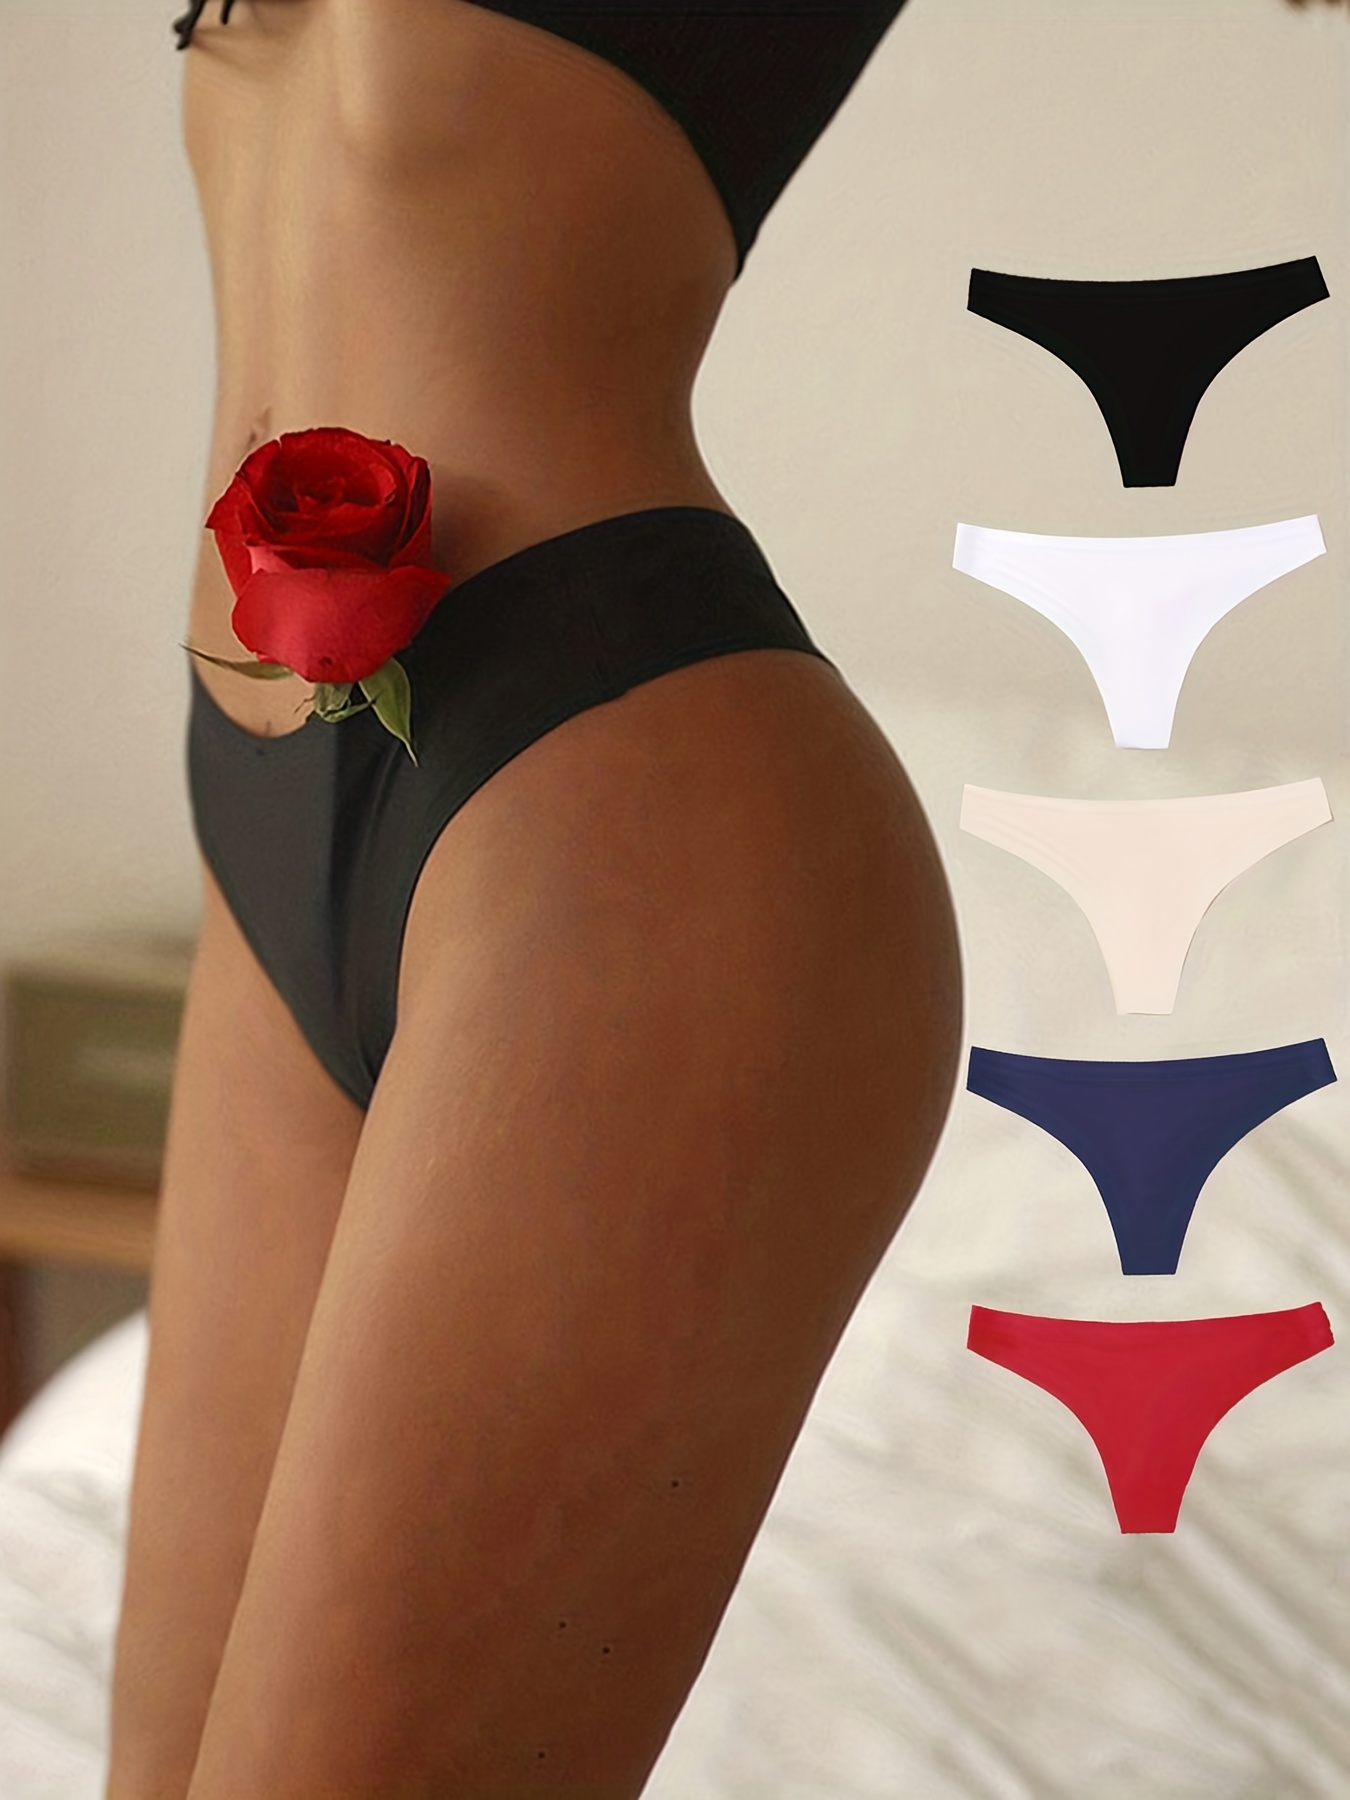 7 Pcs Women's Mixed Color Low Waist Tanga Panties, Soft Breathable Cheeky  Panties, Women's Underwear & Lingerie